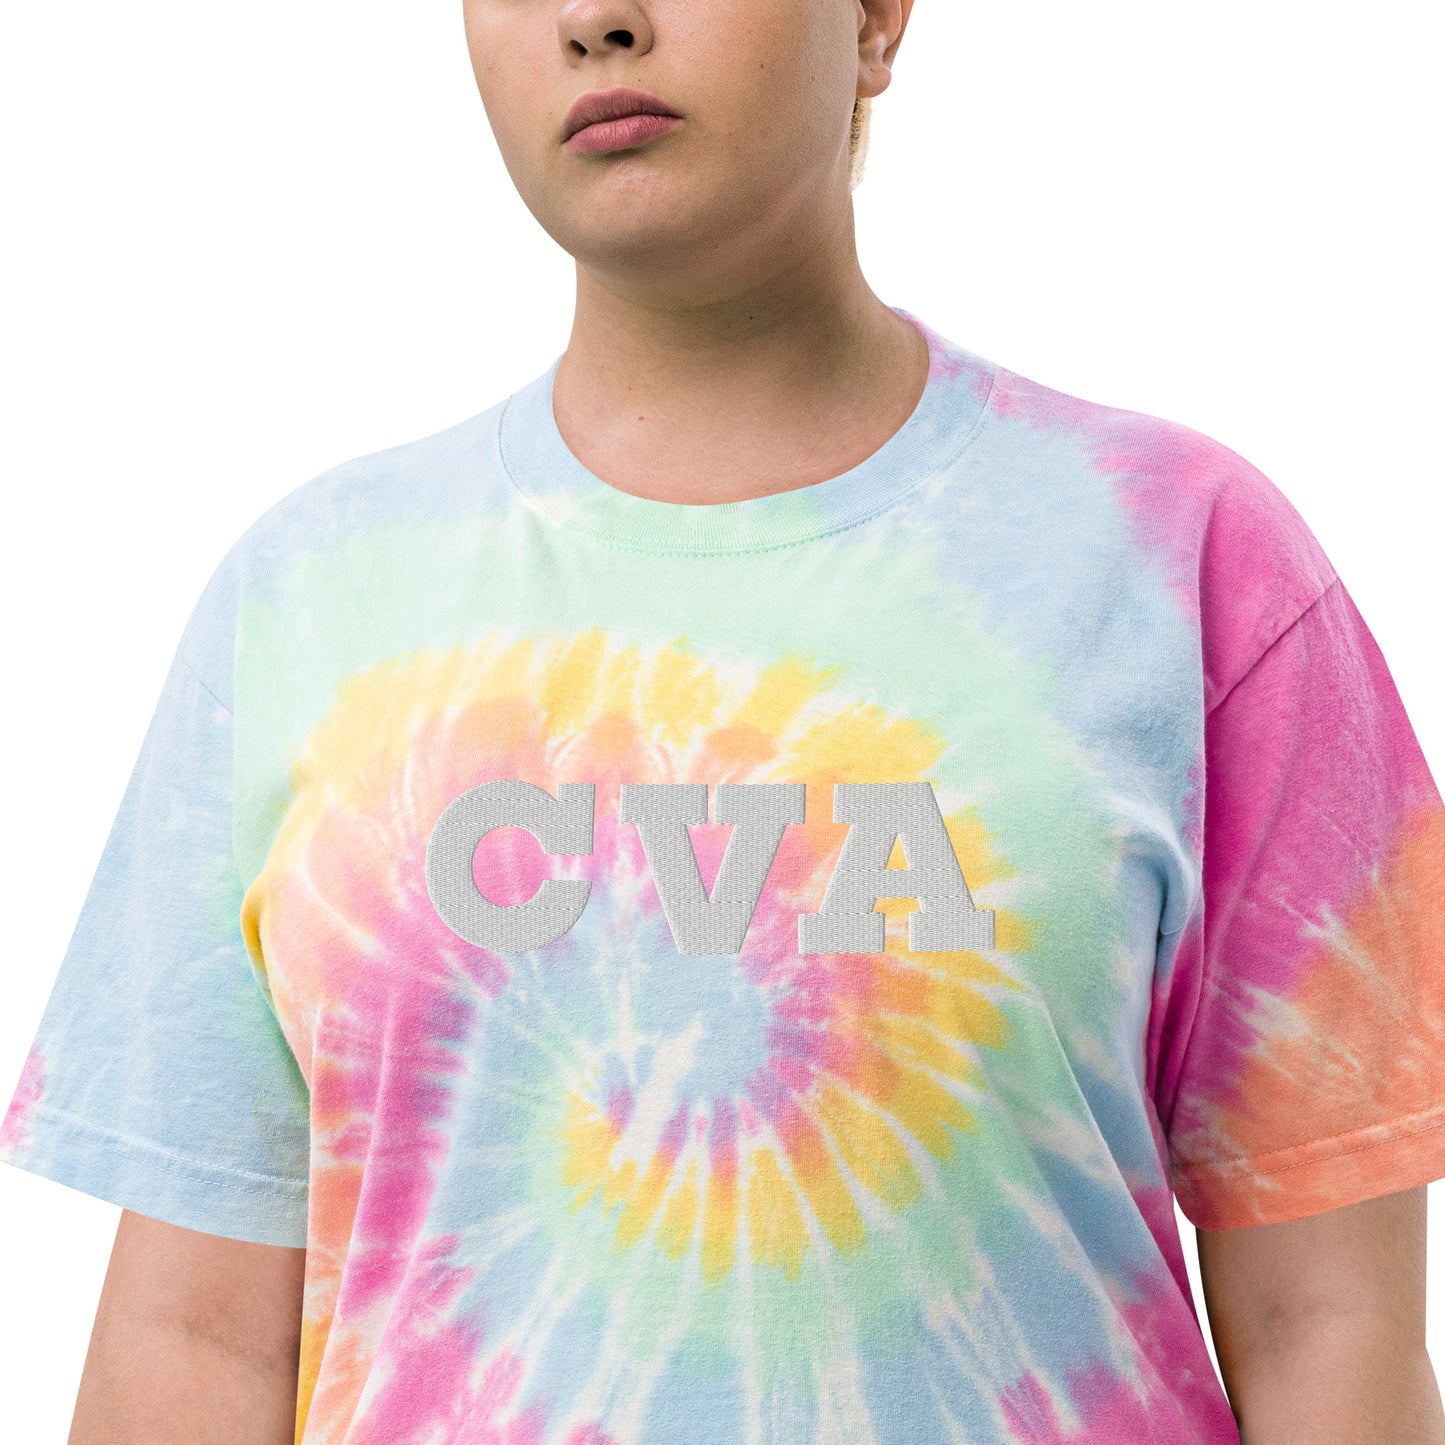 CVA Oversized tie-dye t-shirt